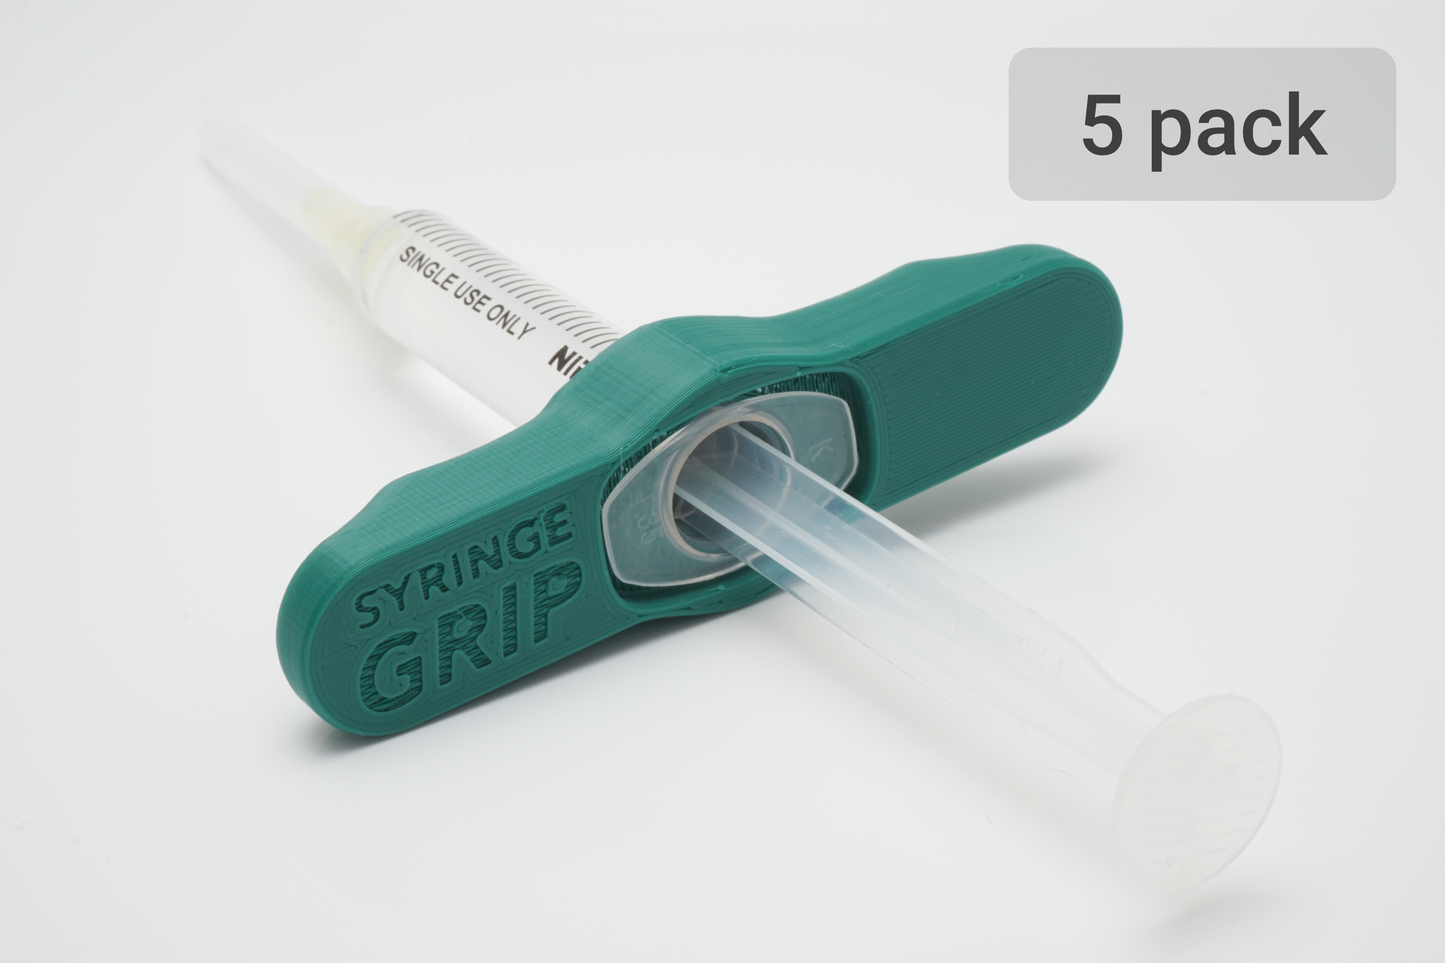 Multi pack | 5 SyringeGrips | Turquoise